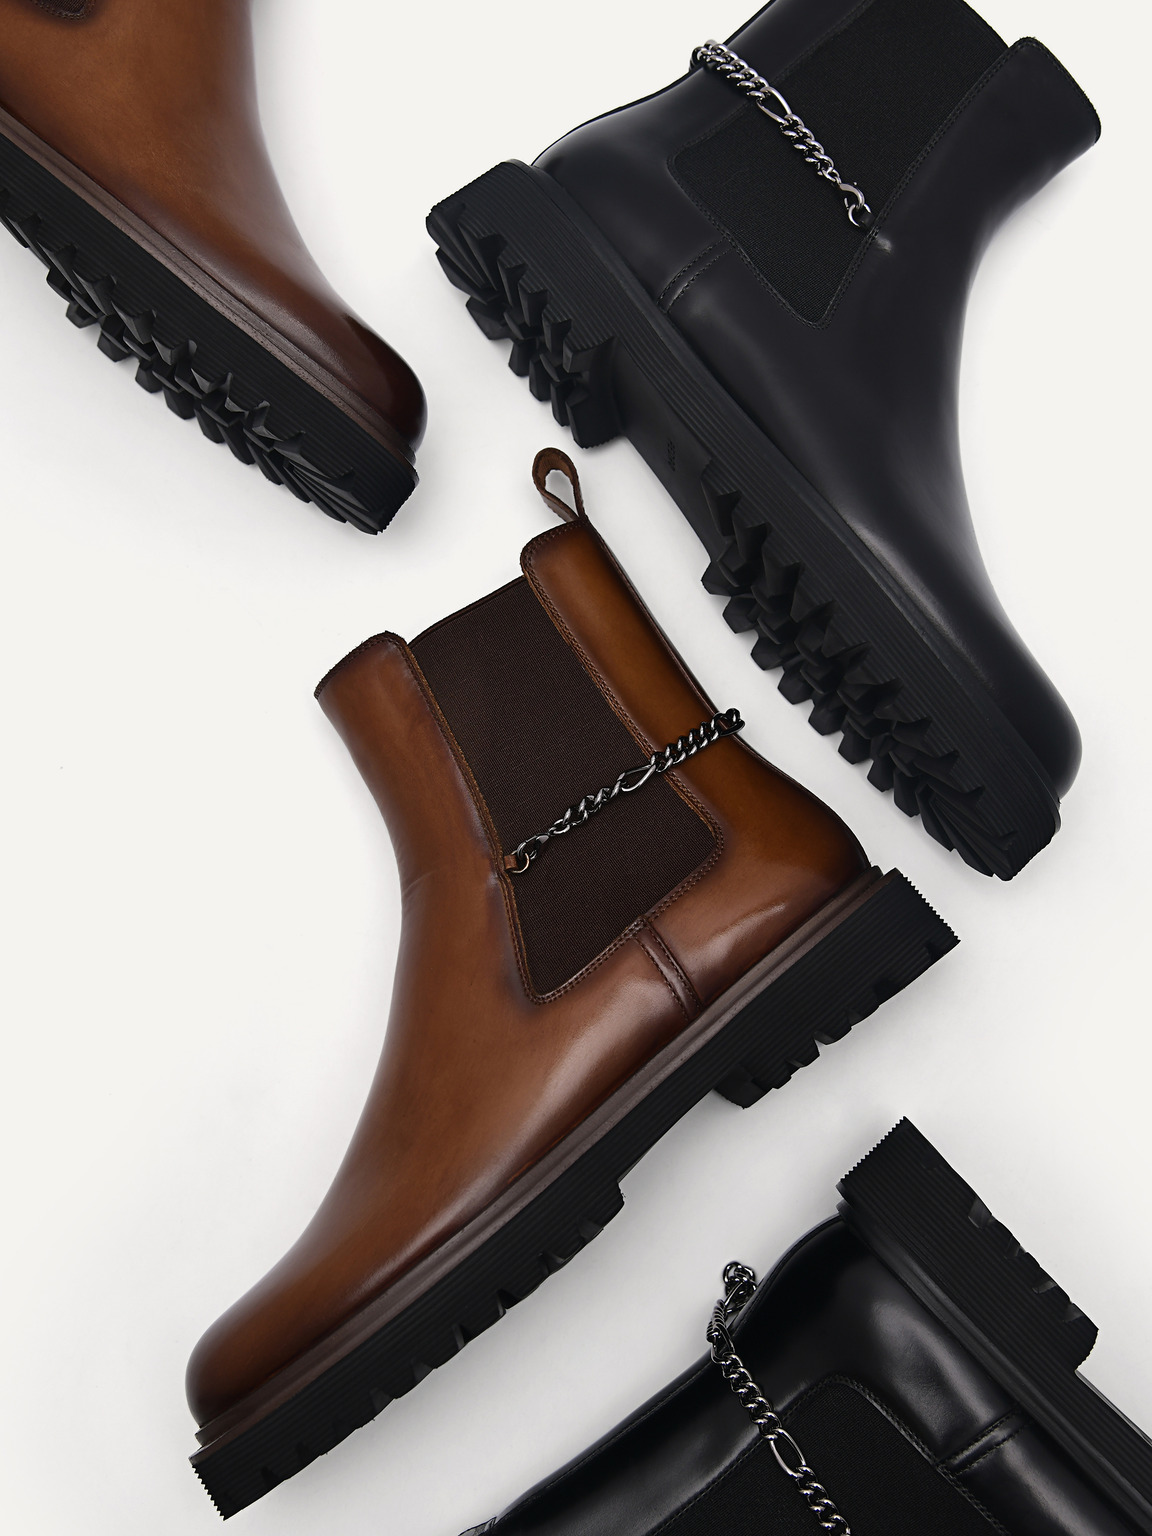 Leather Sistrah Boots, Dark Brown